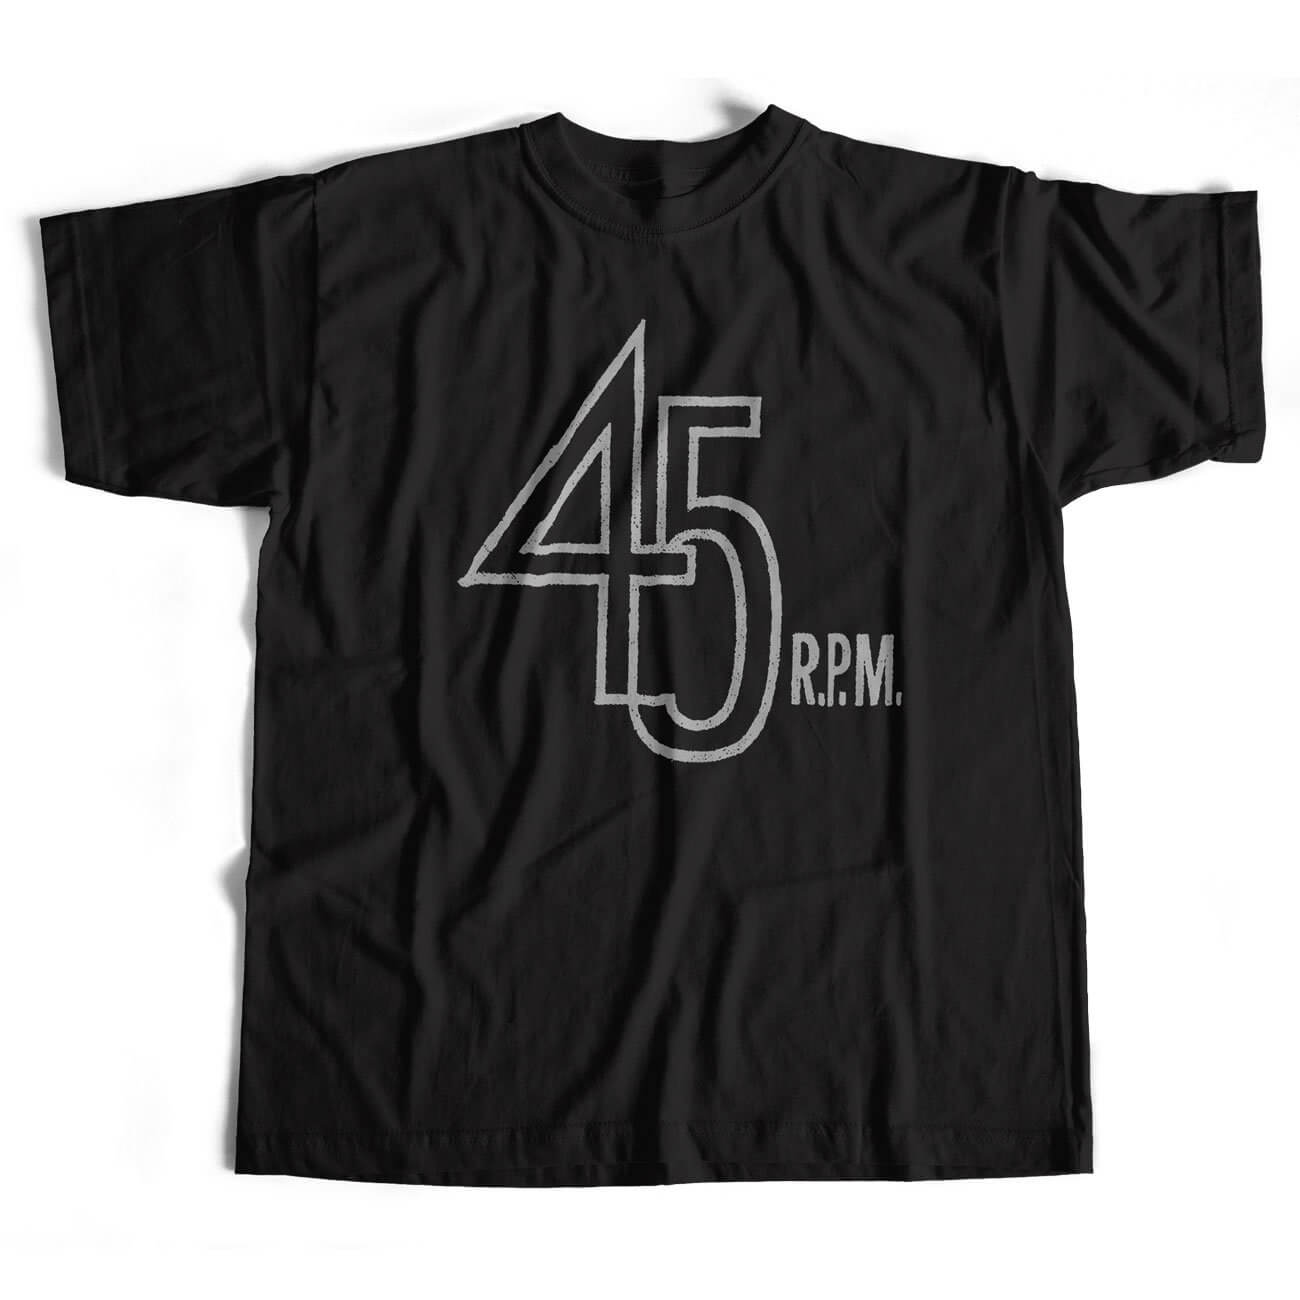 45rpm T Shirt - Retro Vinyl Single Classic